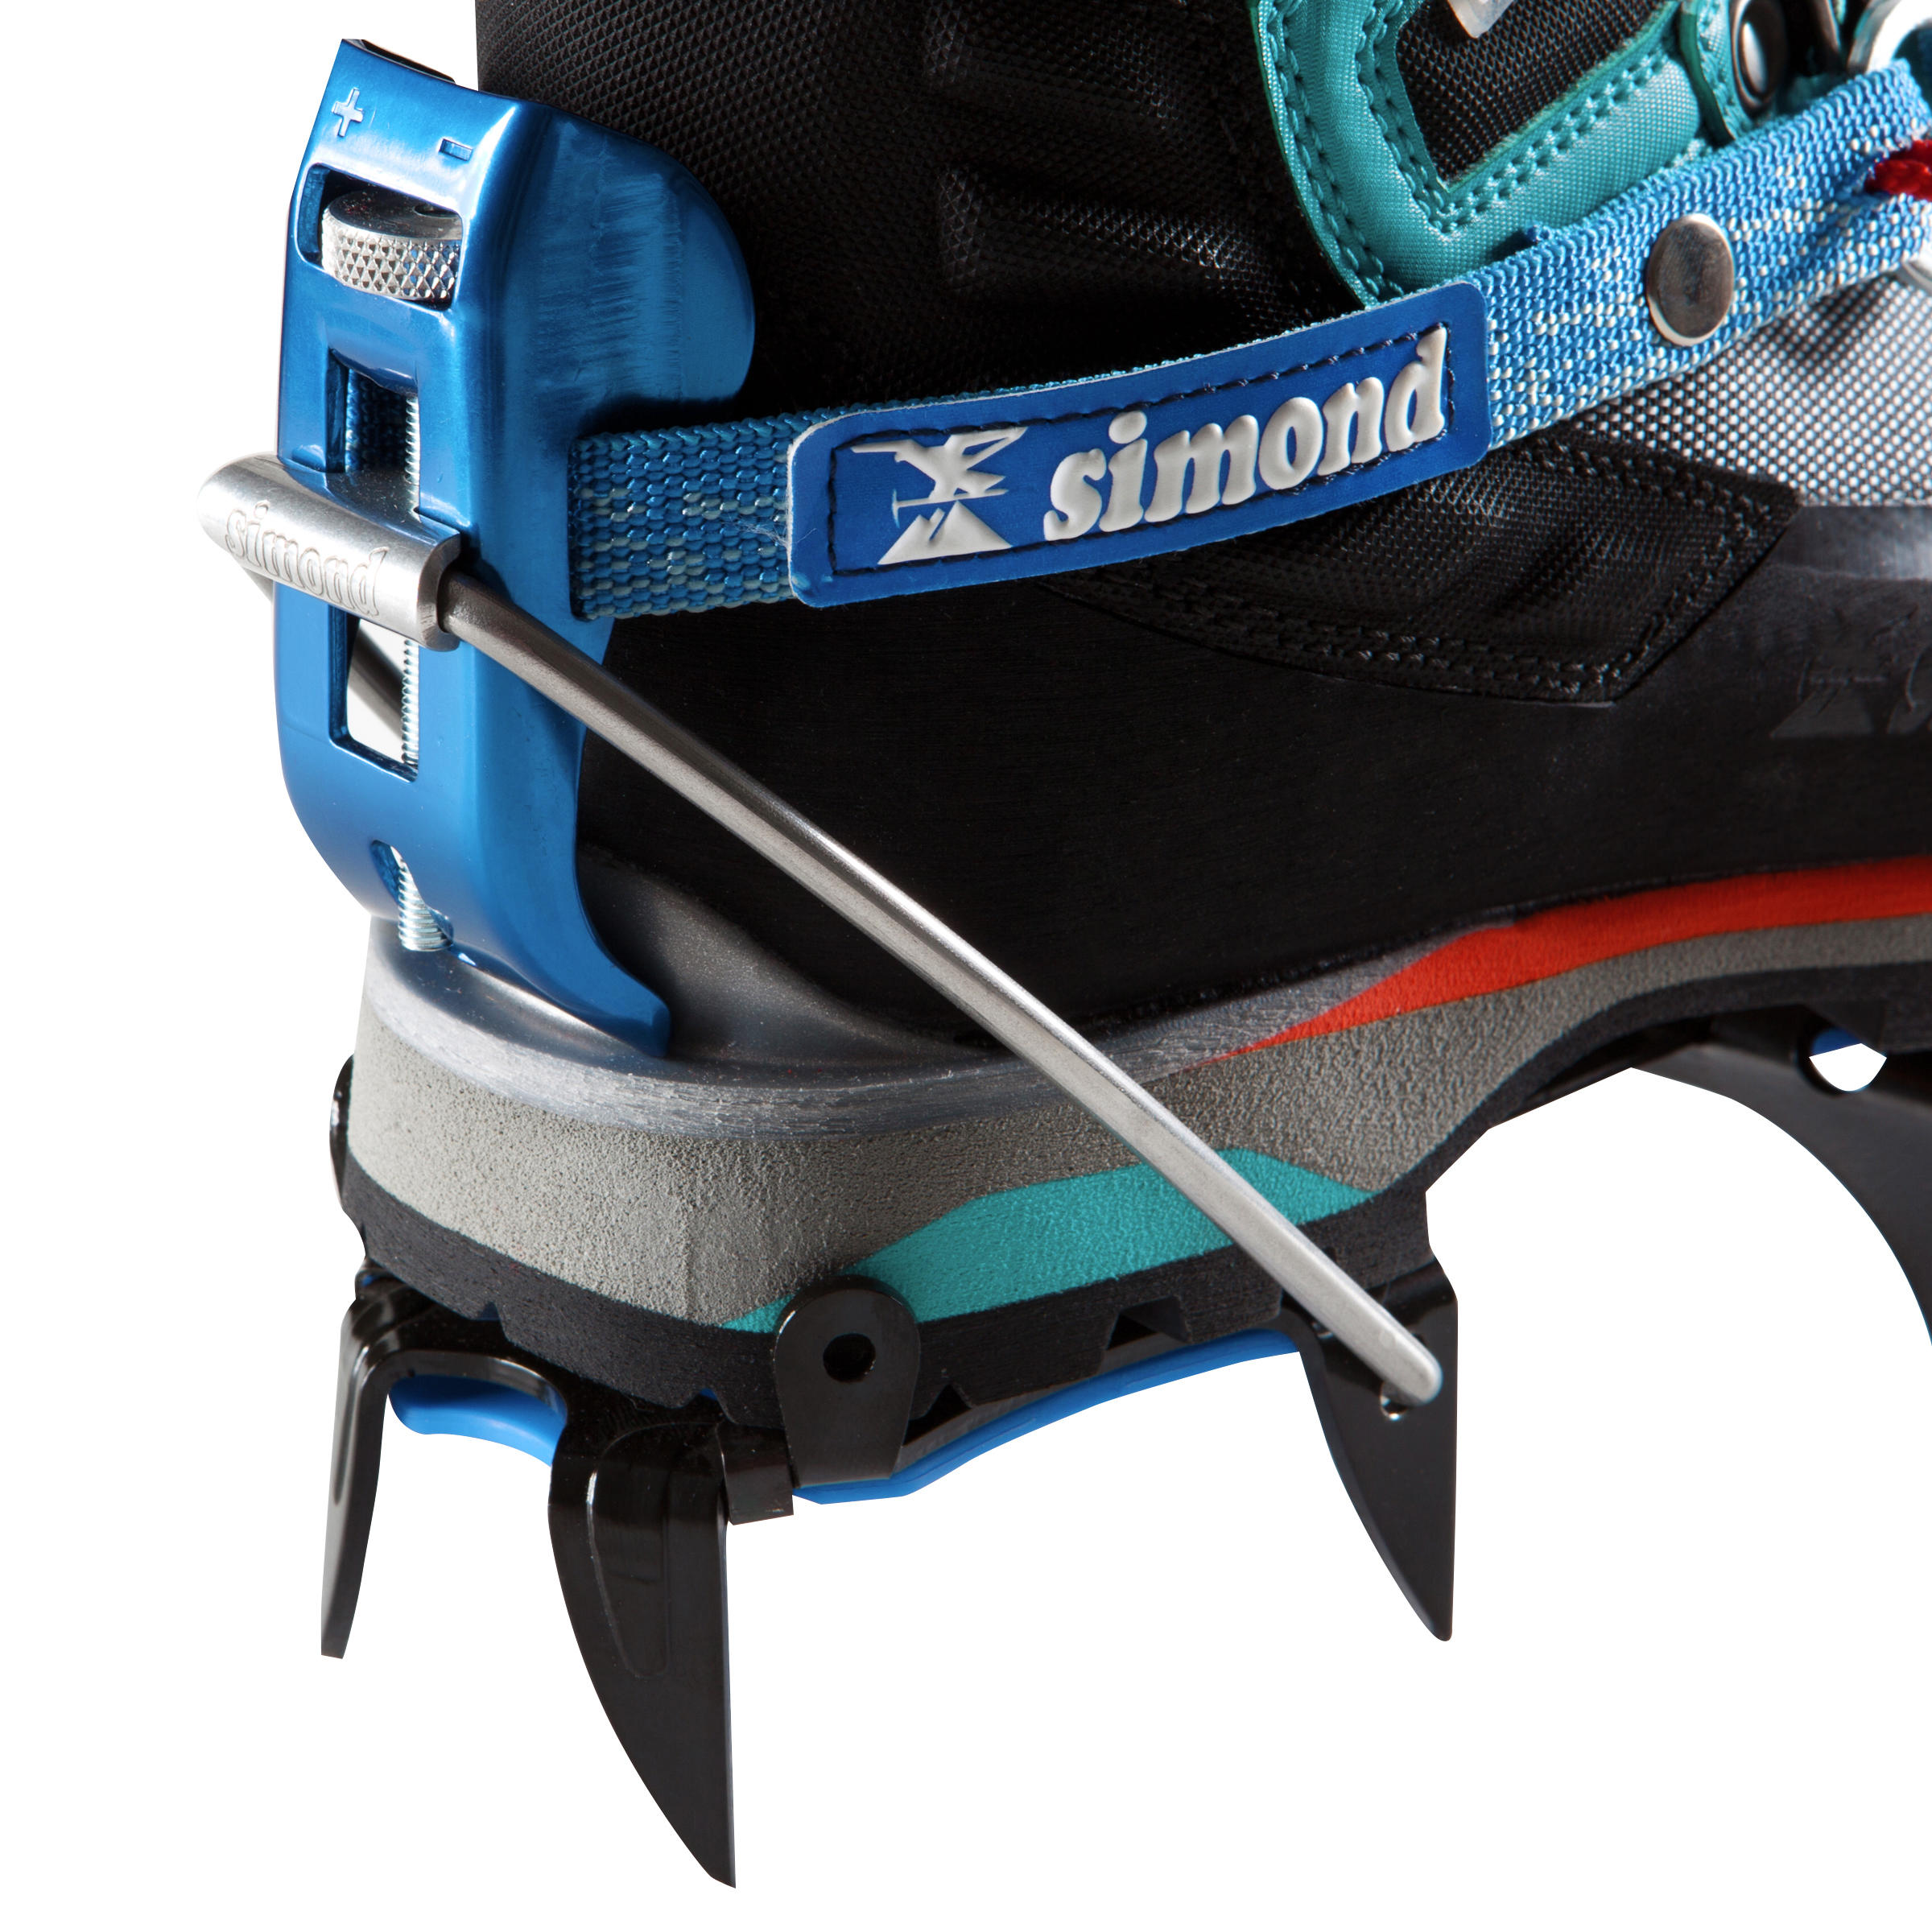 Women's 3 seasons mountaineering boots - ALPINISM LIGHT turquoise 11/16